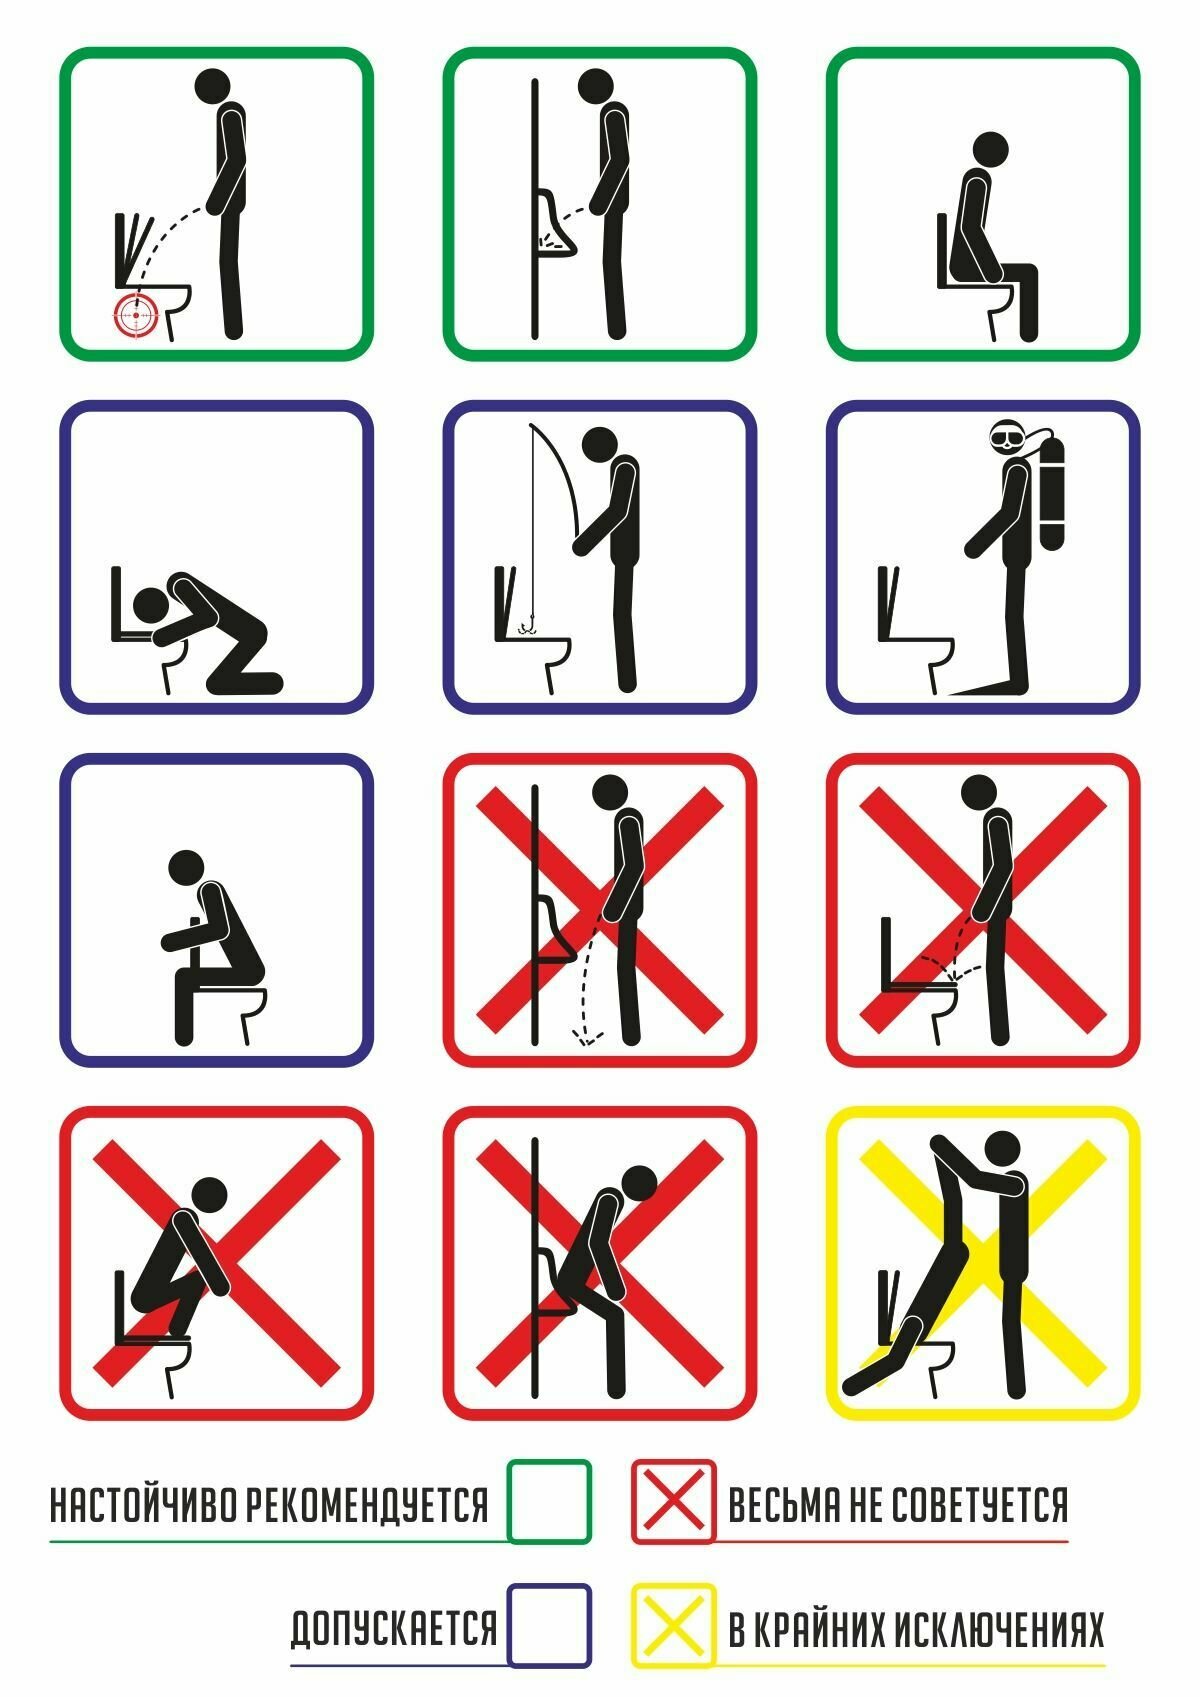 Постер А3. Правила поведения в туалете. Суперфотоглянец